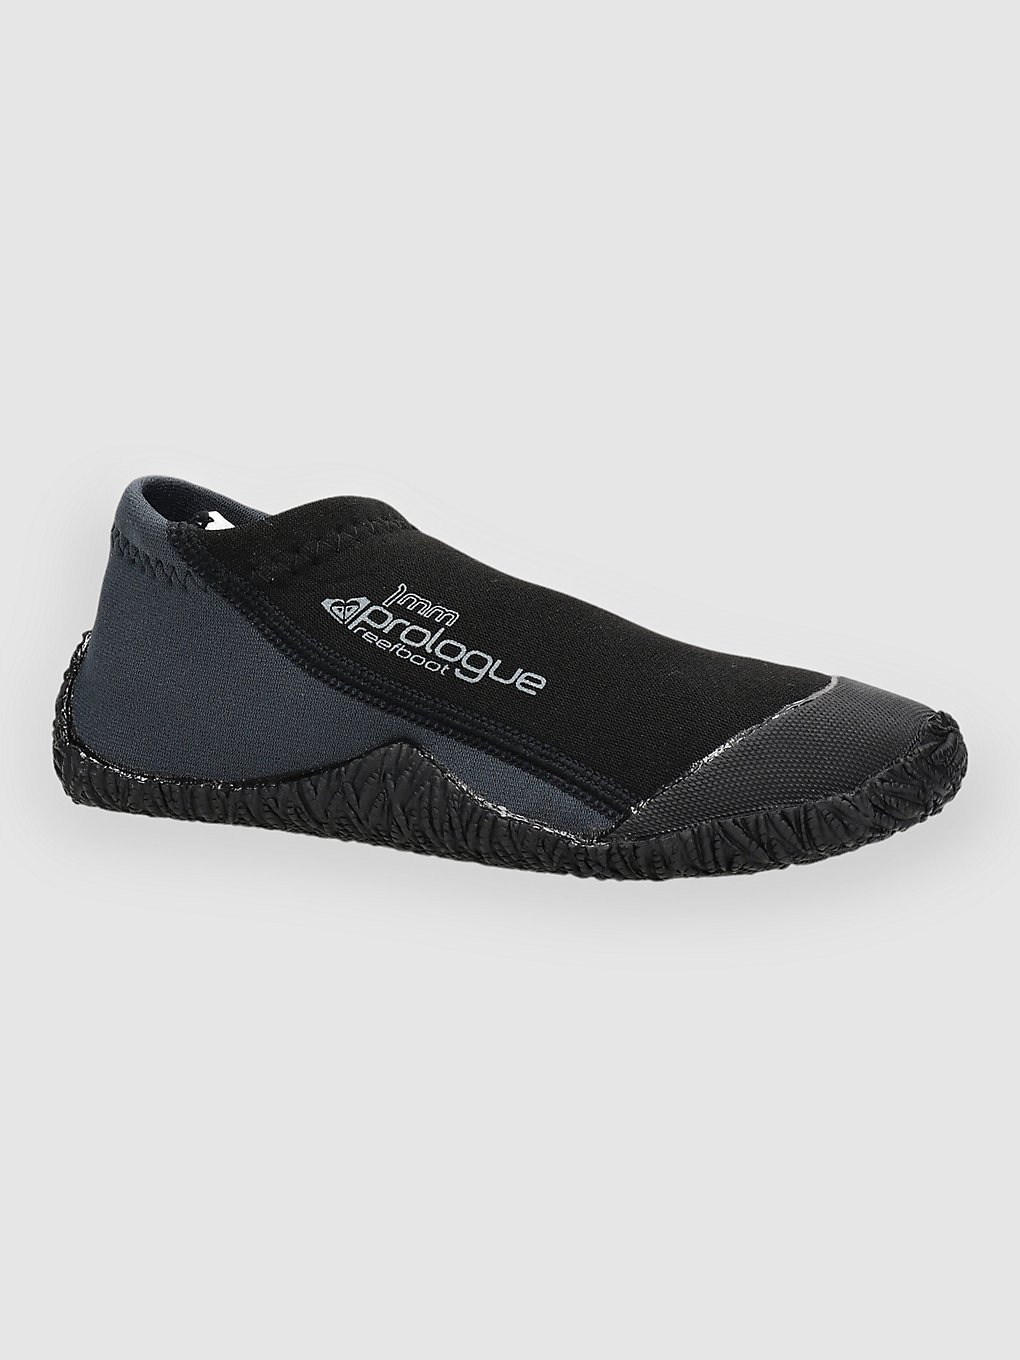 Roxy 1.0 Prologue Round Toe Surf schoenen zwart